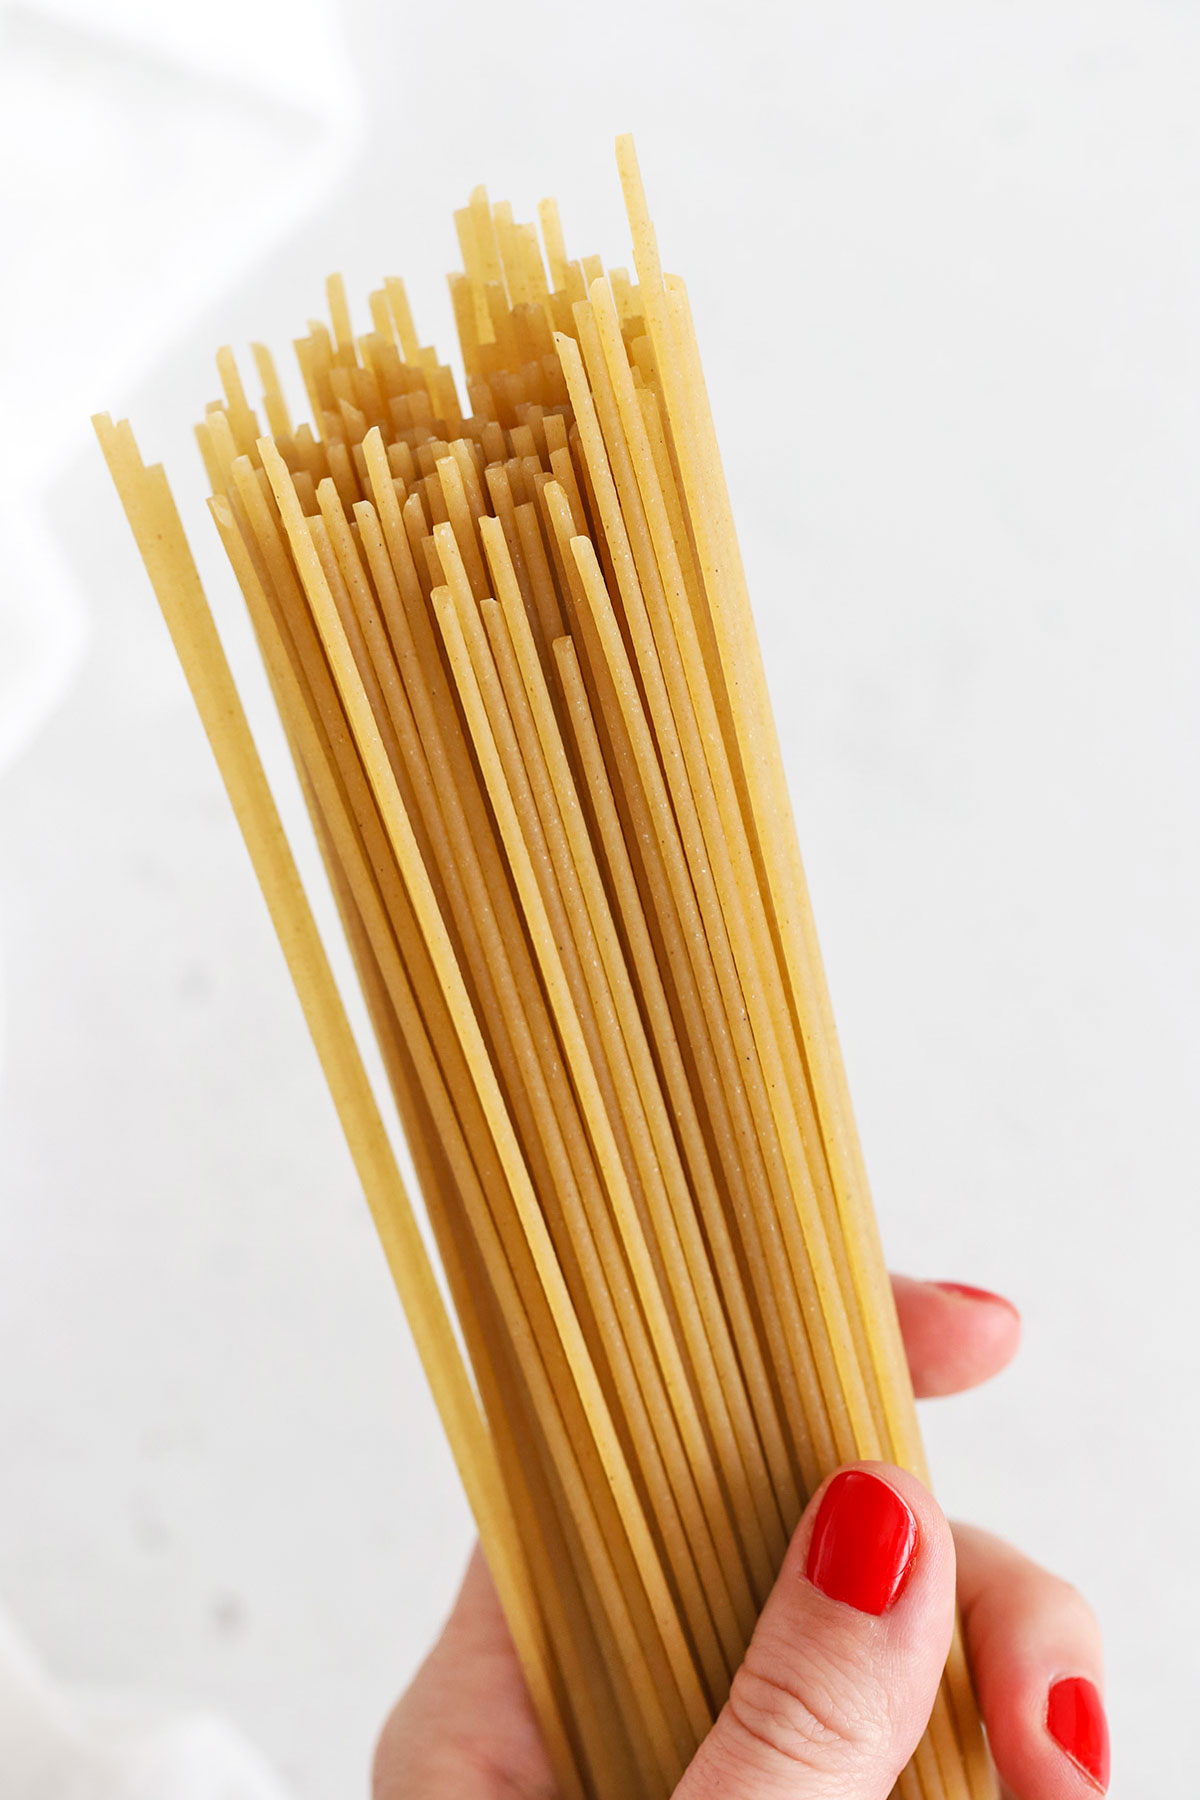 Hand holding gluten-free spaghetti noodles